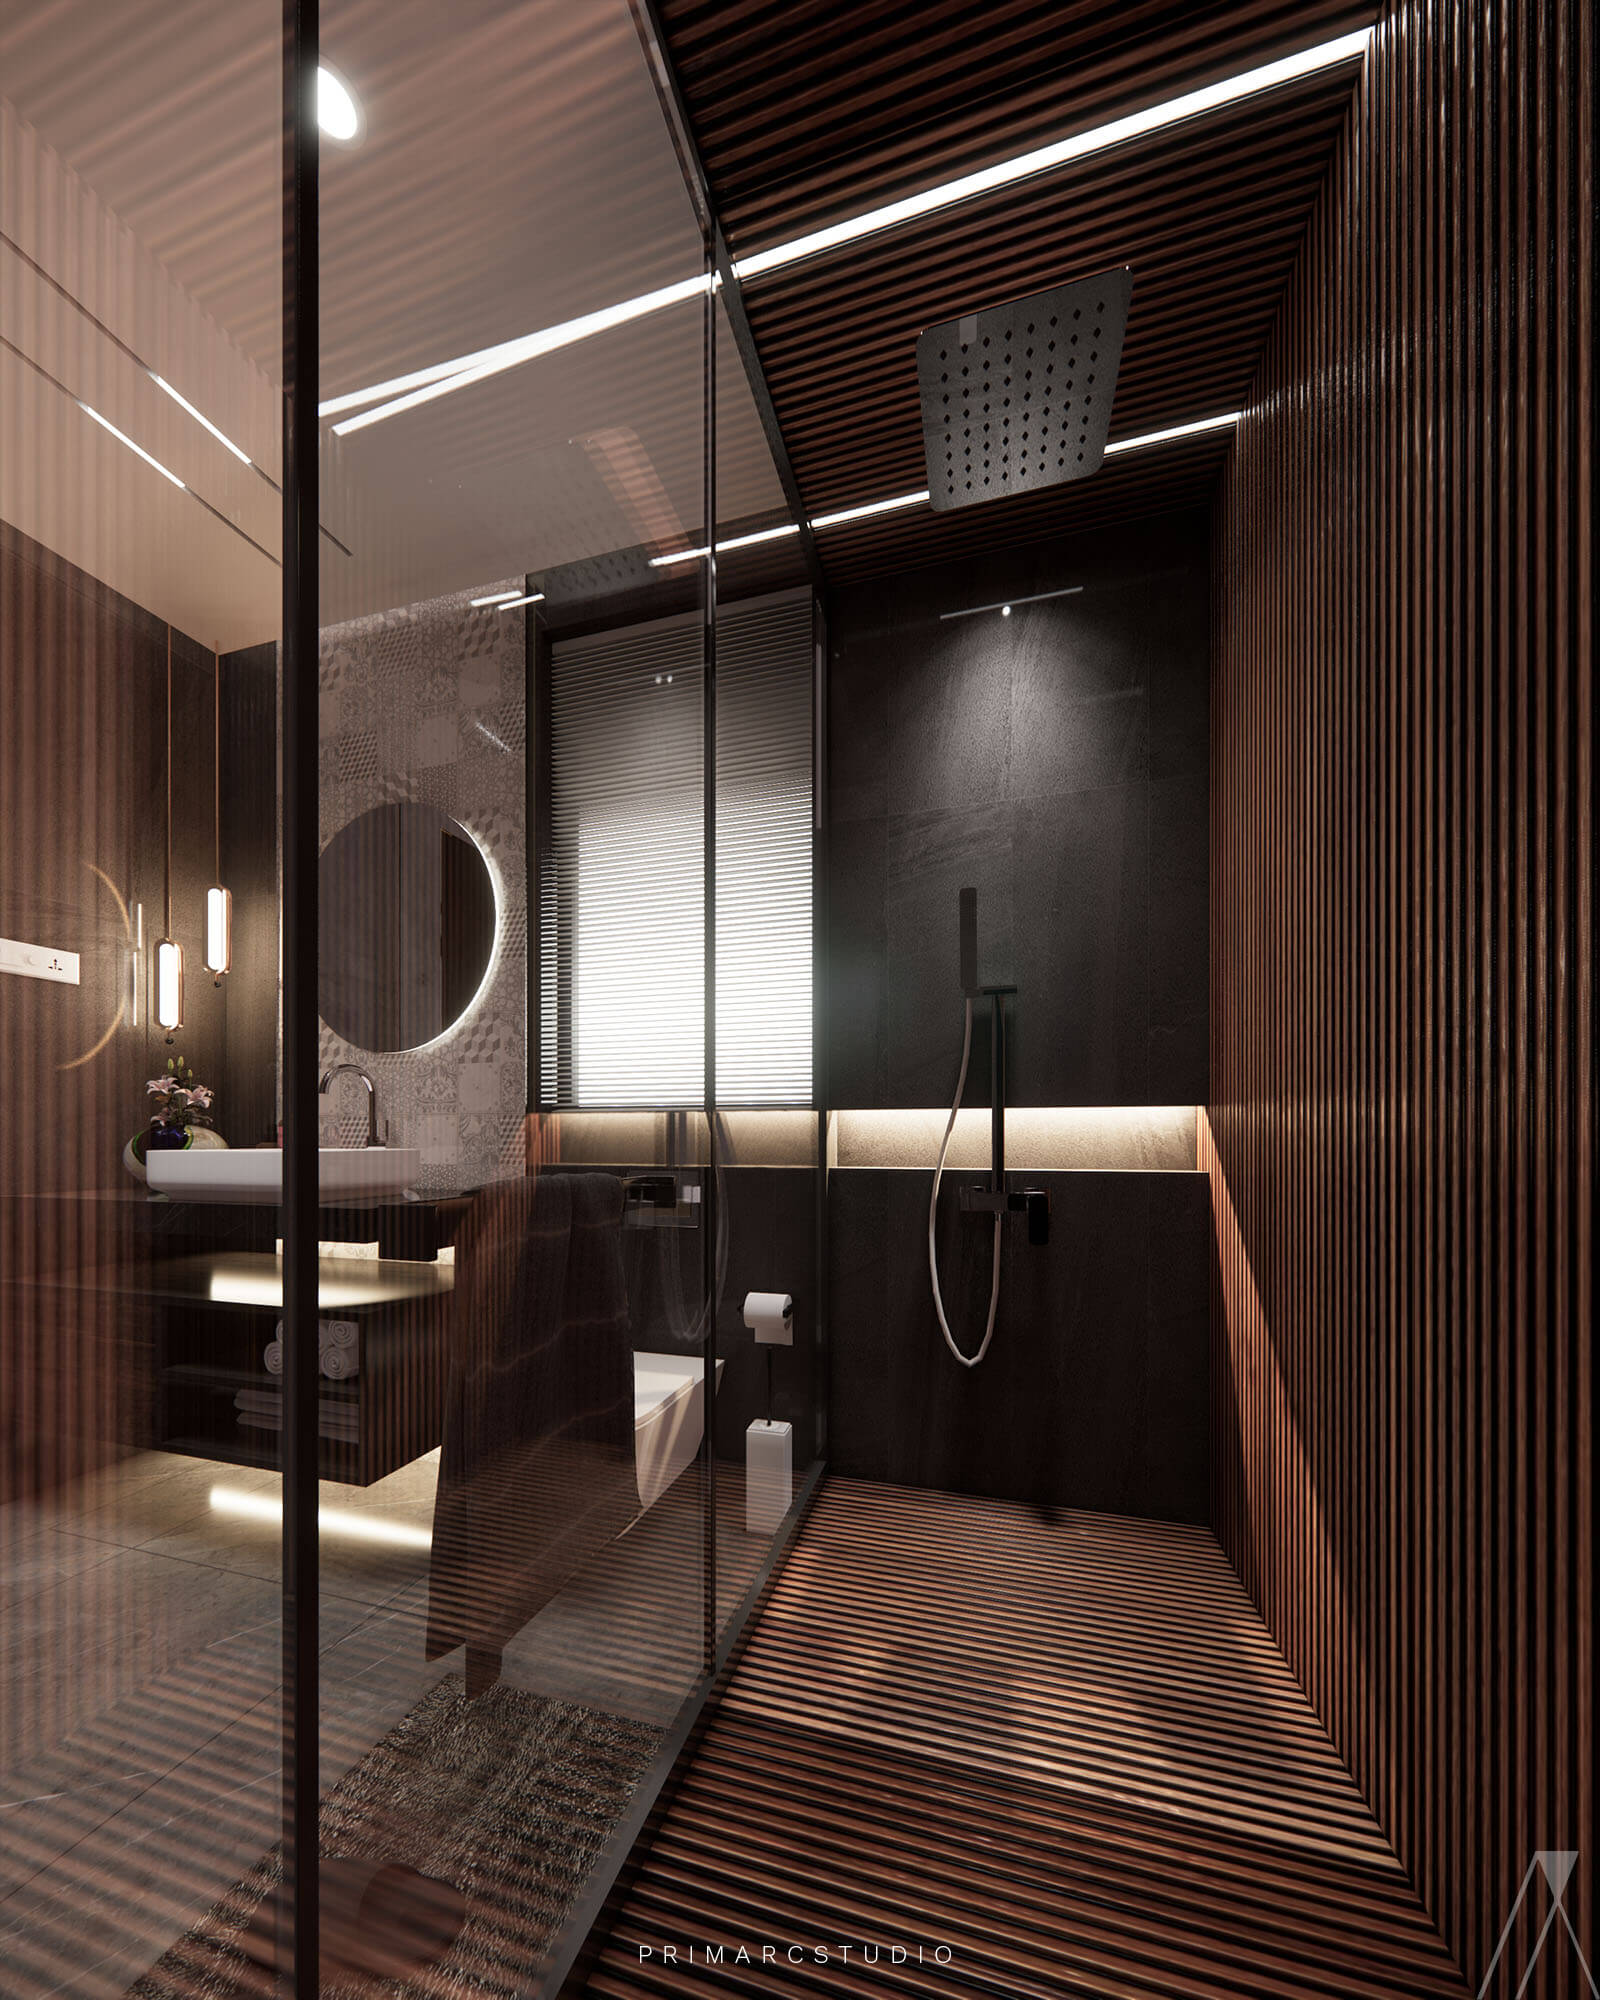 Washroom interior design in neutral colors and round mirror